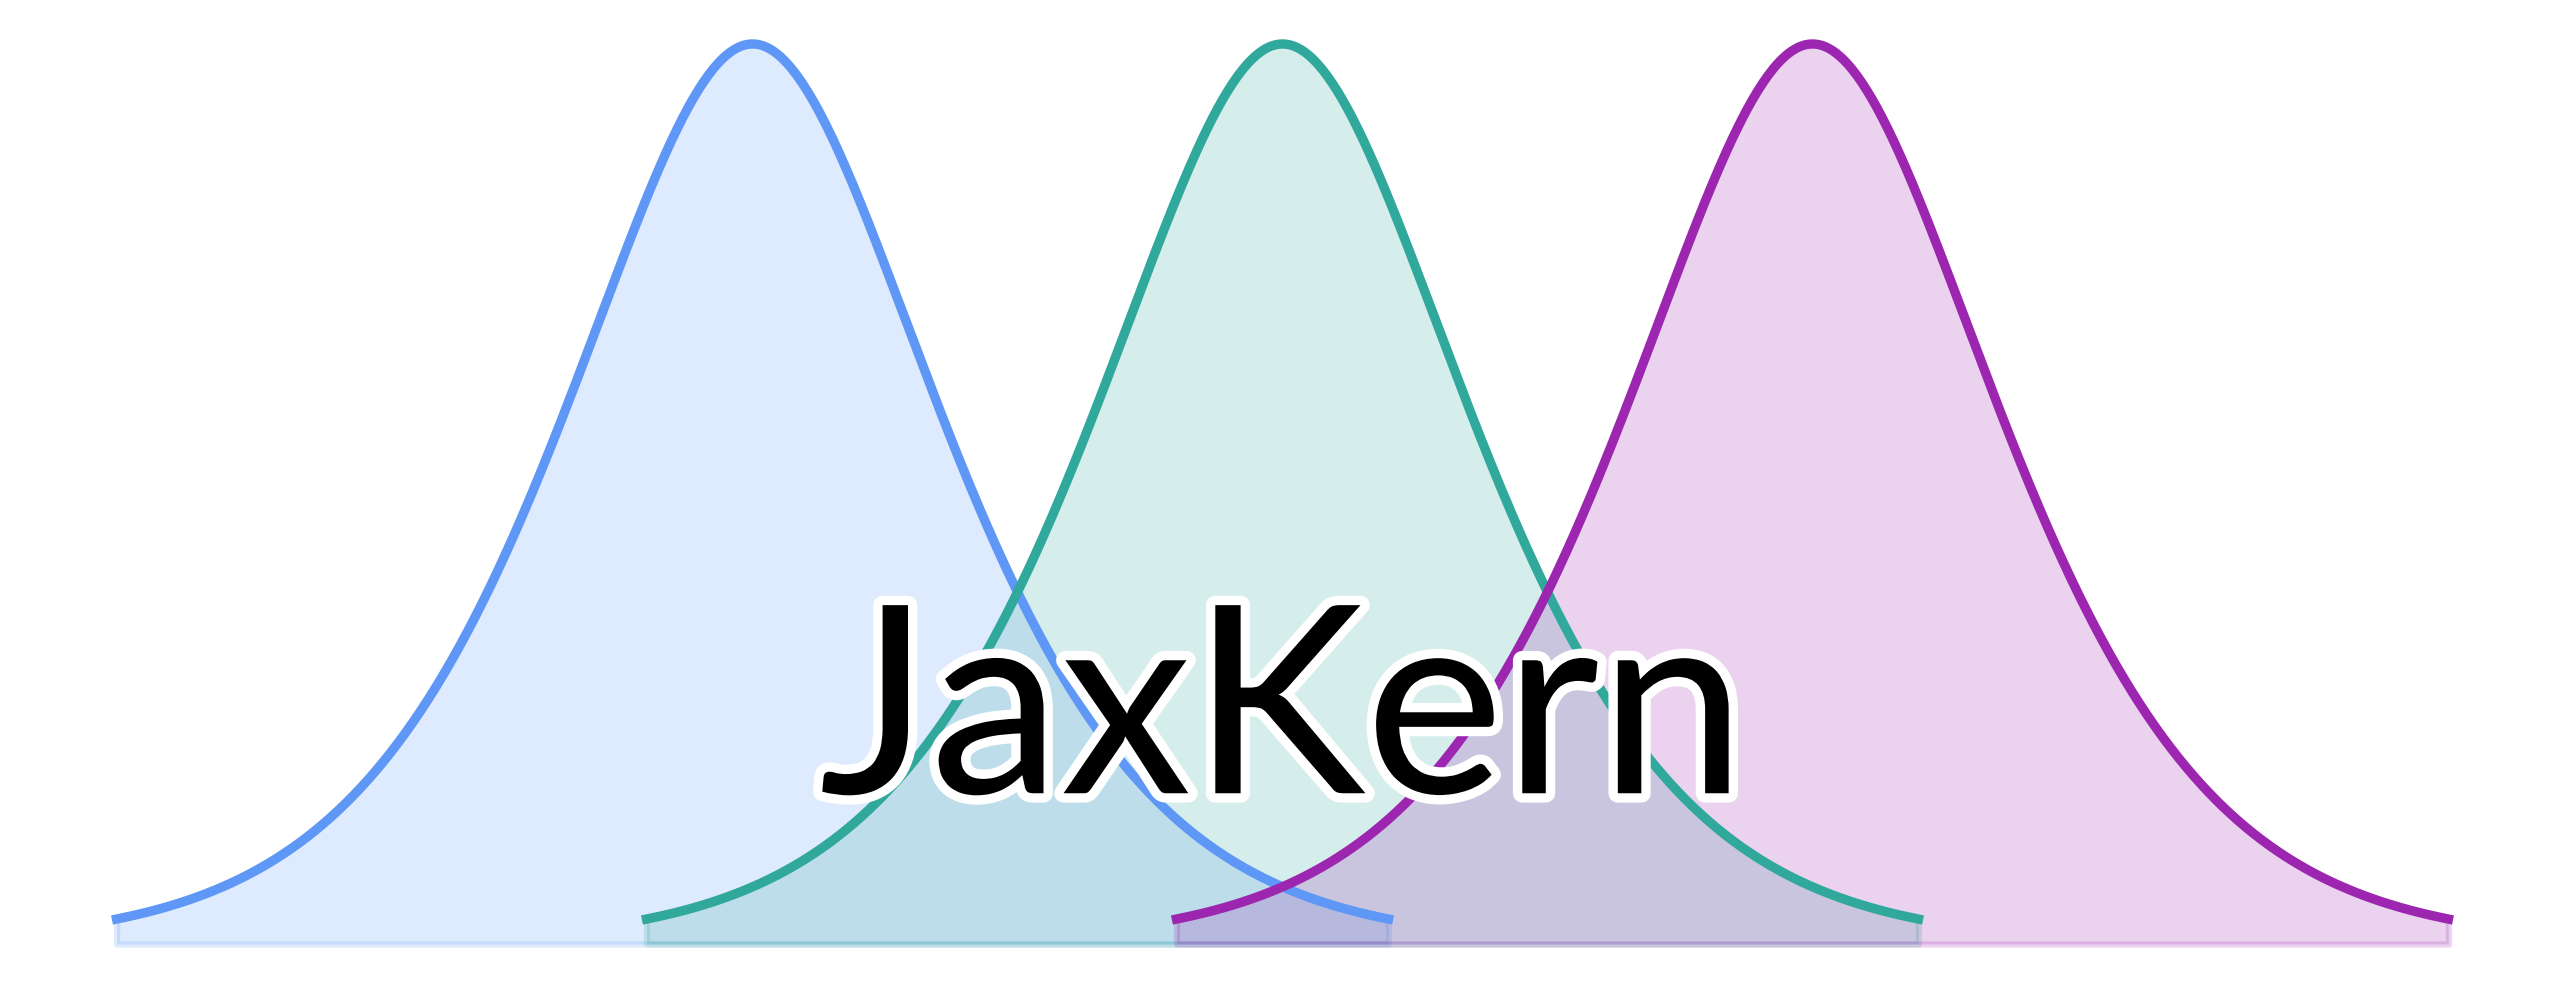 JaxKern's logo